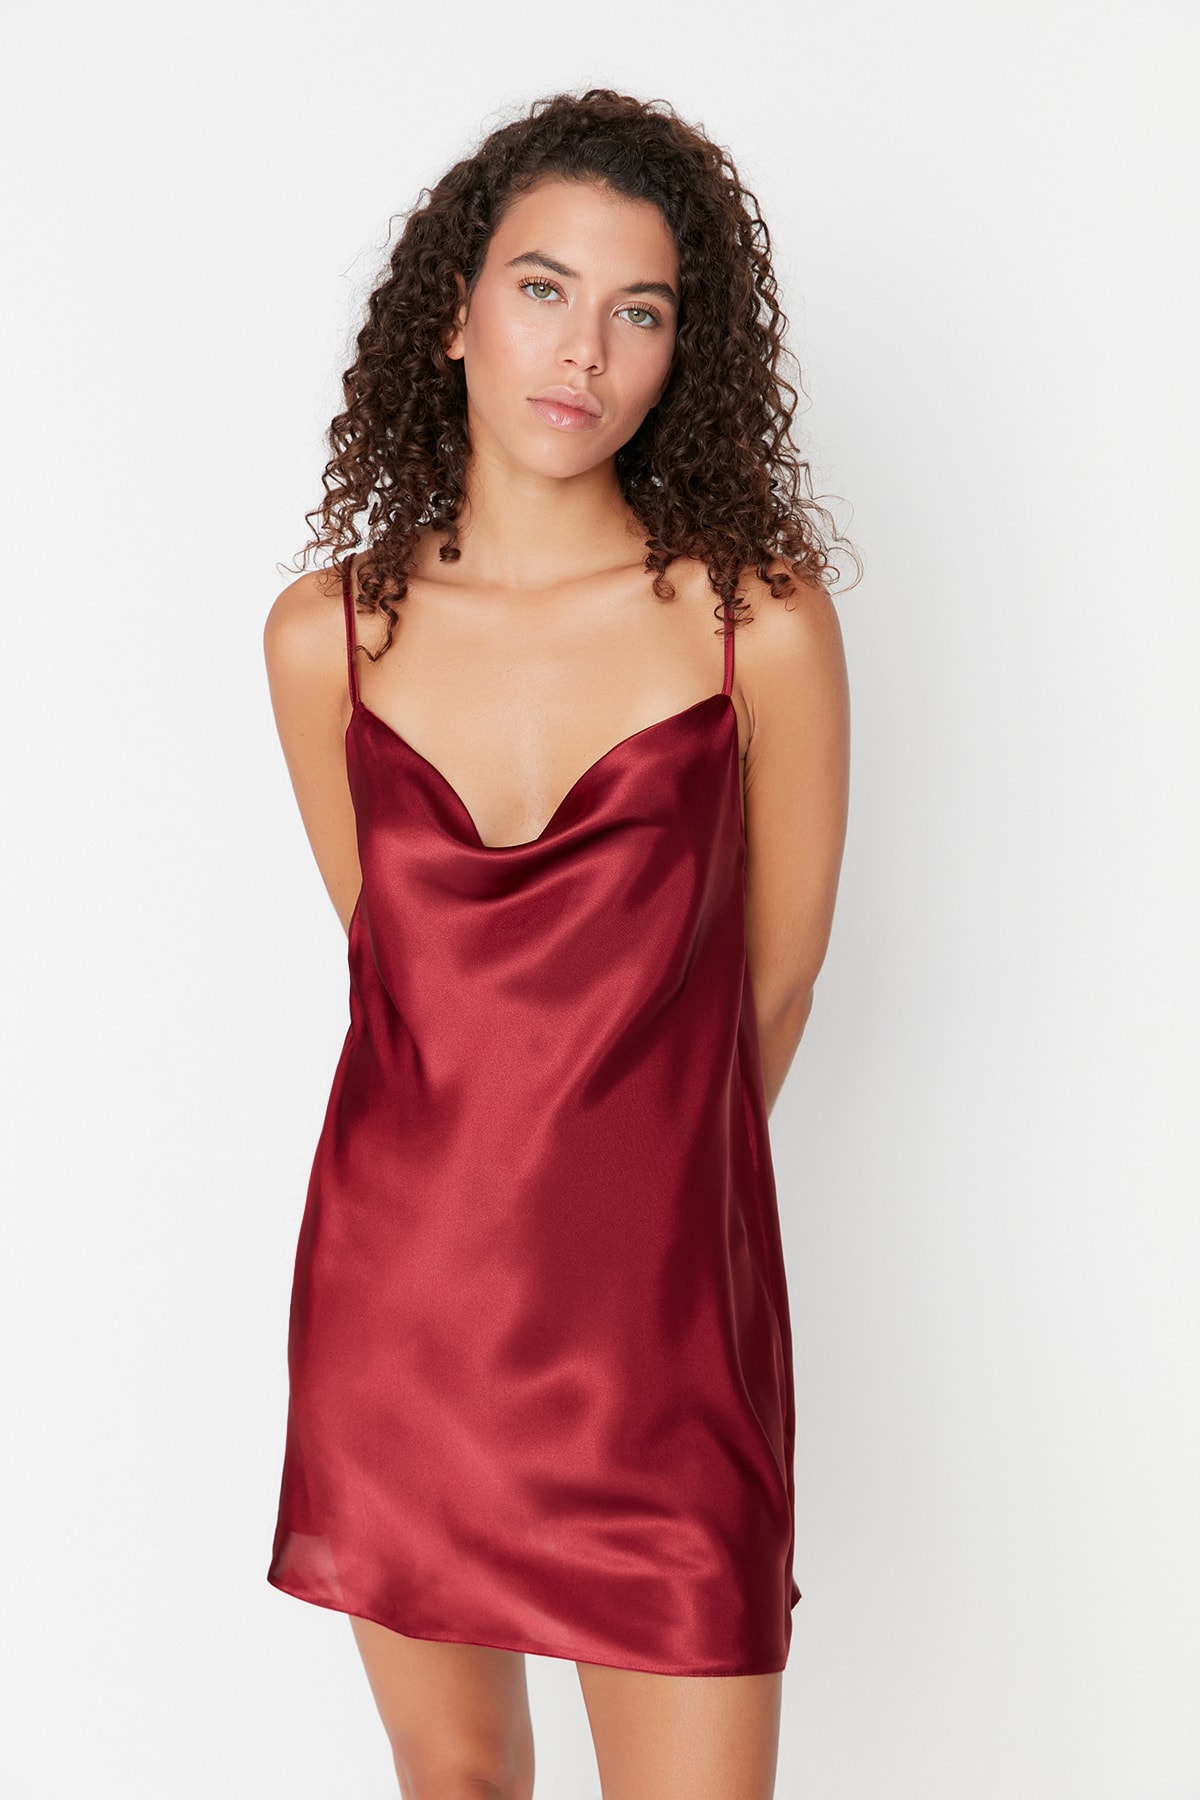 Trendyol Burgundy Neckline Back Detailed Satin Woven Nightgown